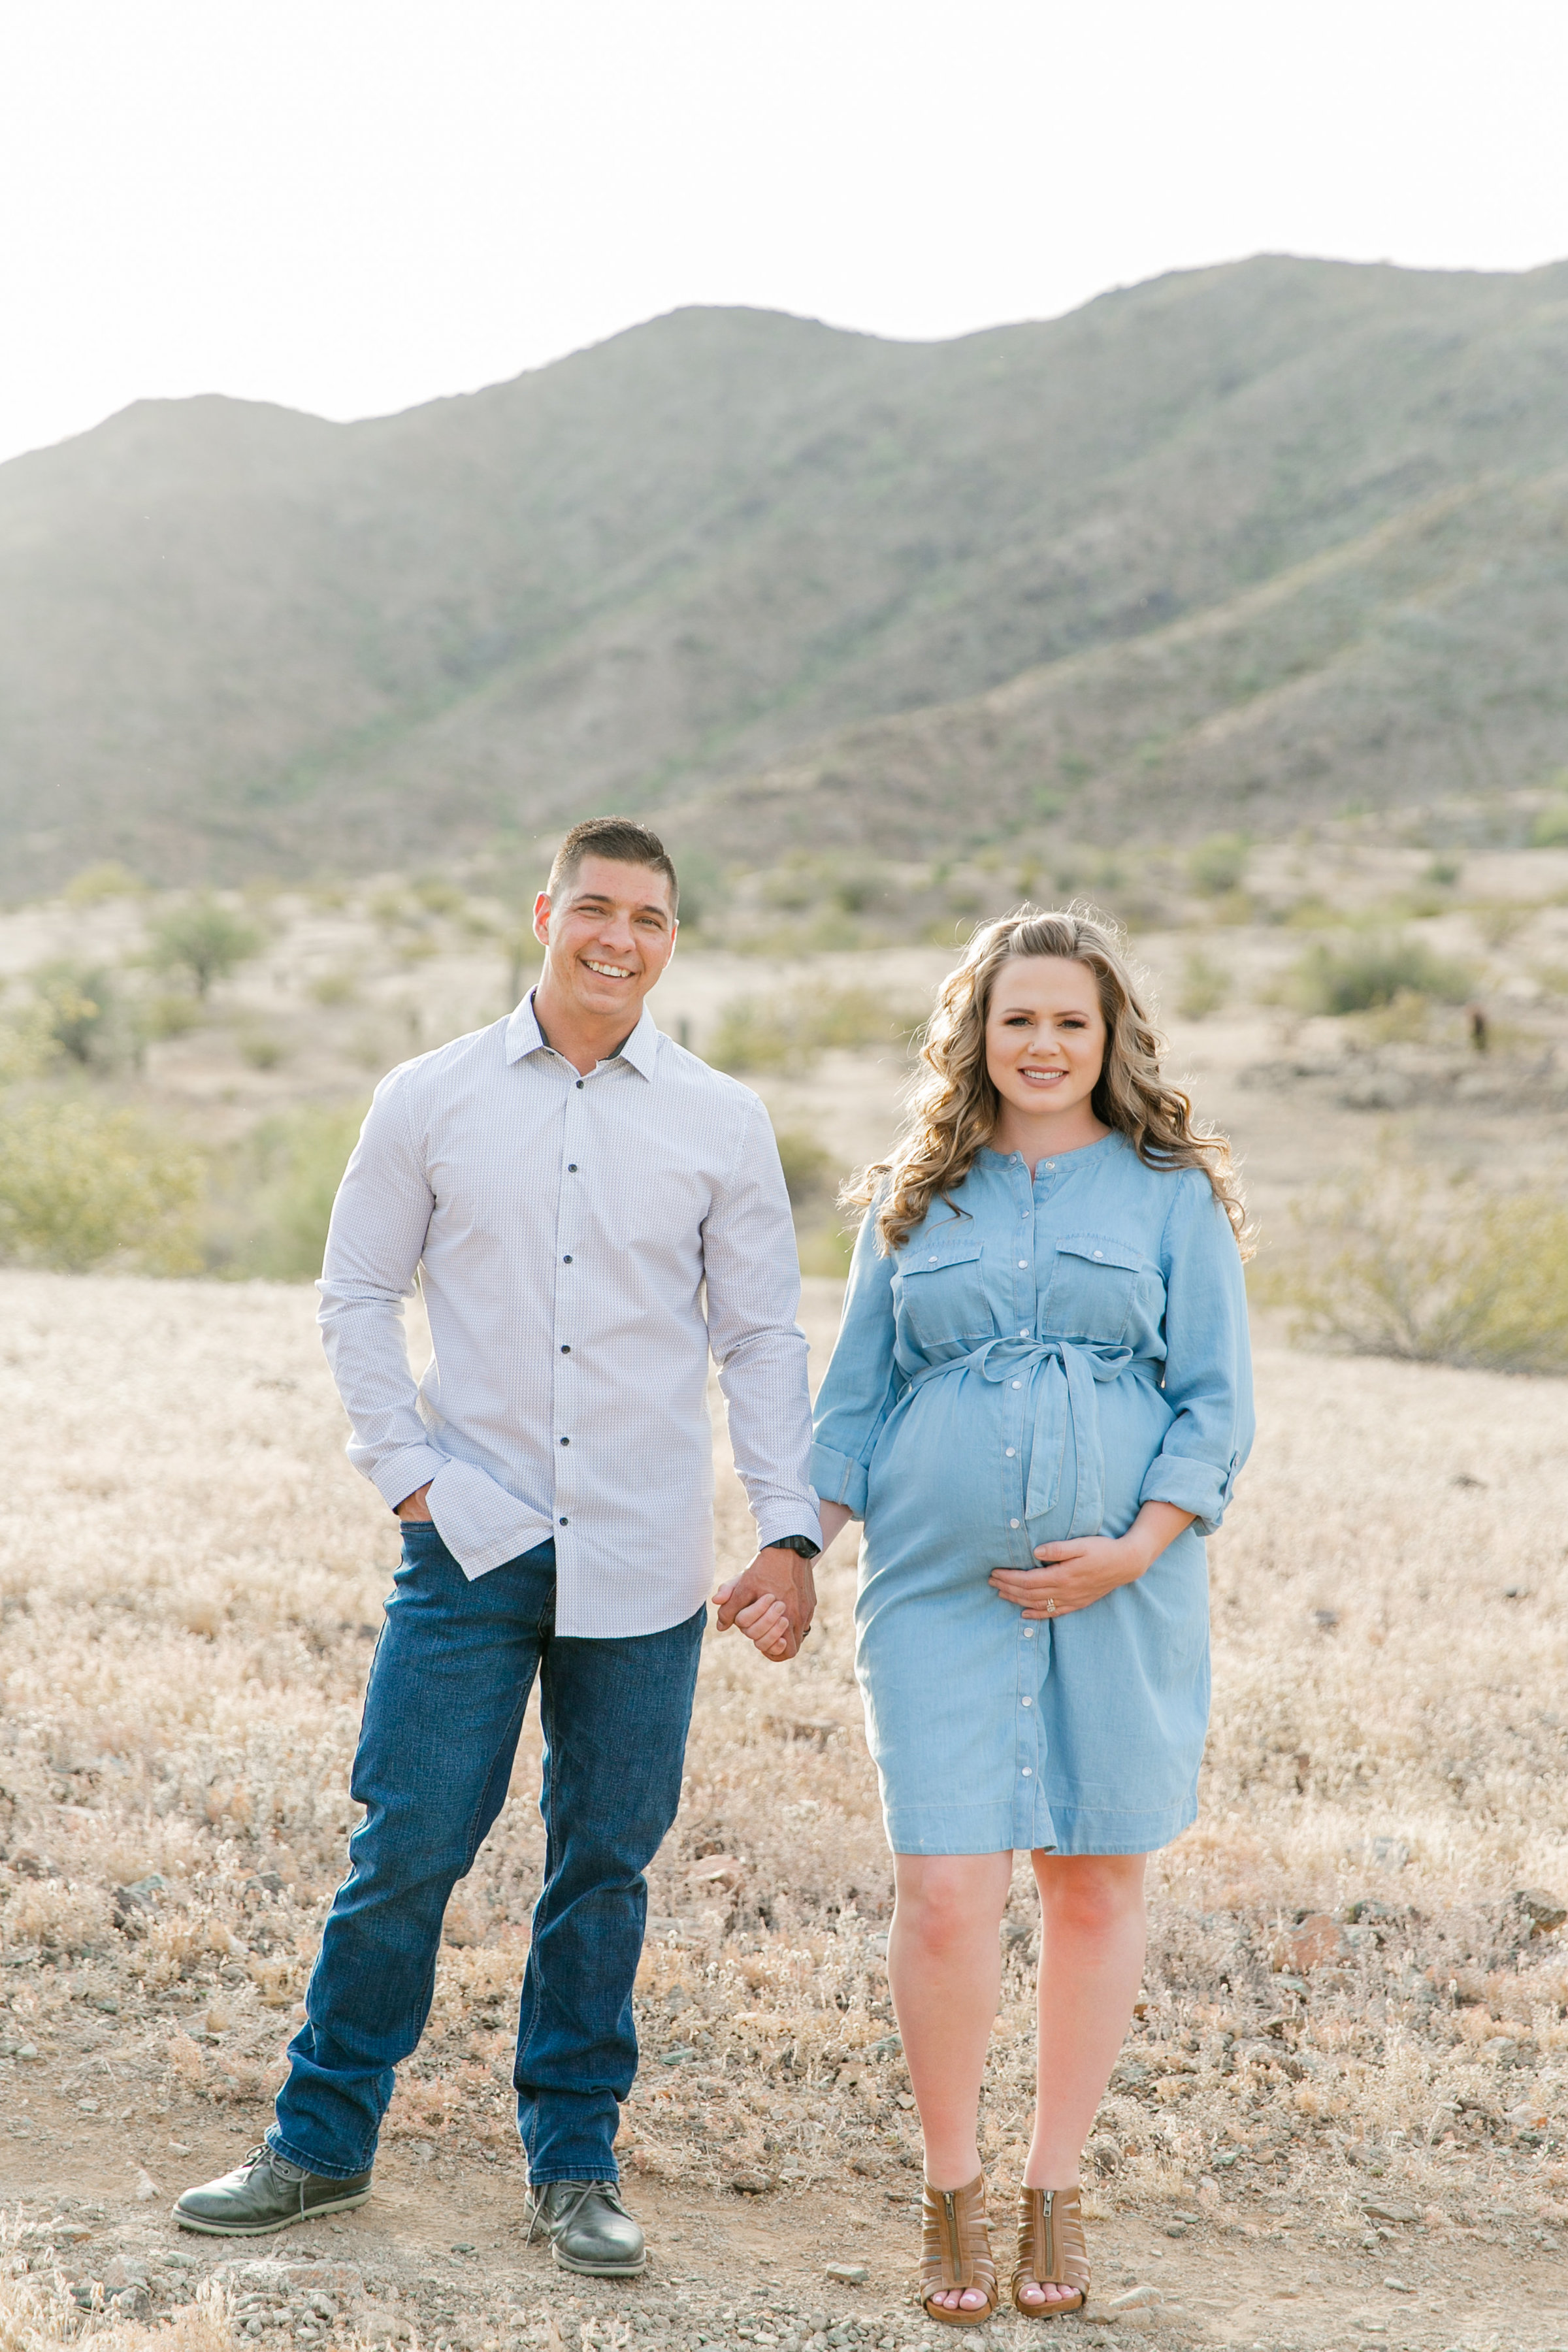 Karlie Colleen Photography - Arizona Maternity Photography-5